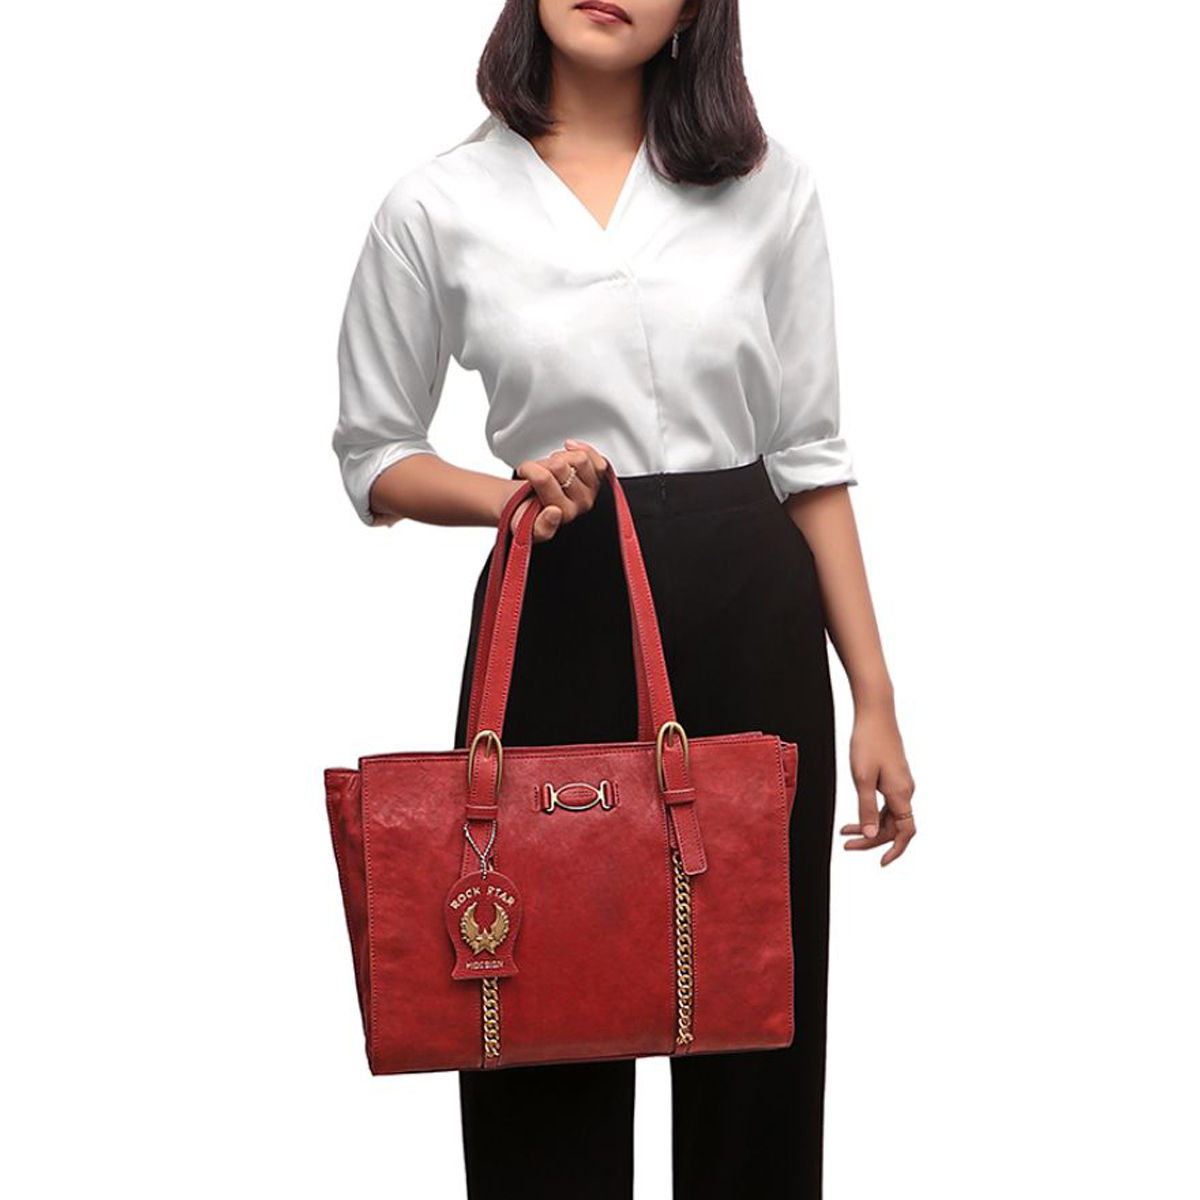 Buy Hidesign Red Lotus SB Women's Handbags online